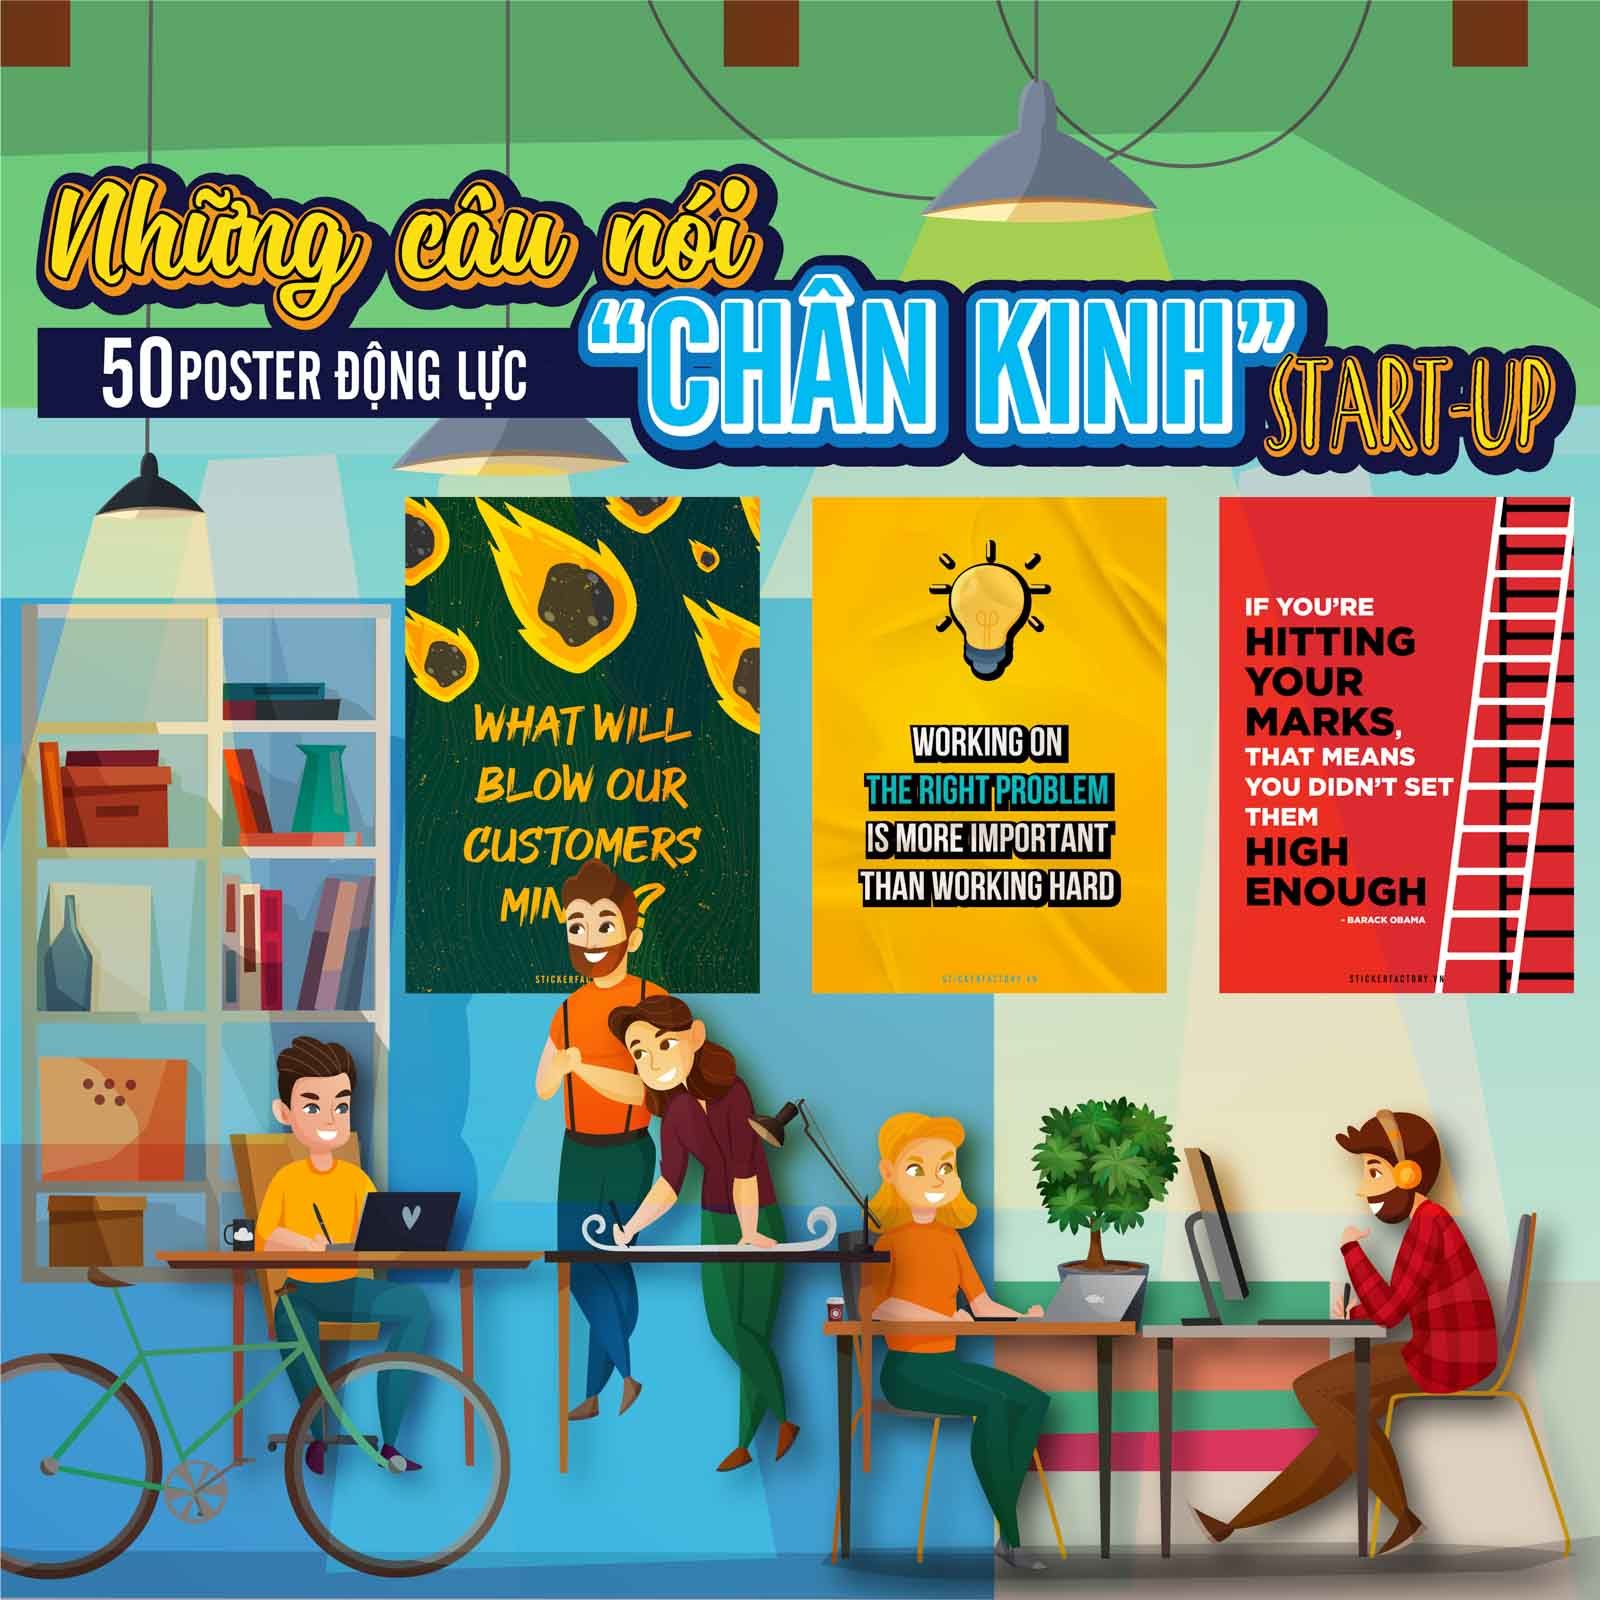 Complaining is not a strategy - Poster động lực Chân Kinh Startup